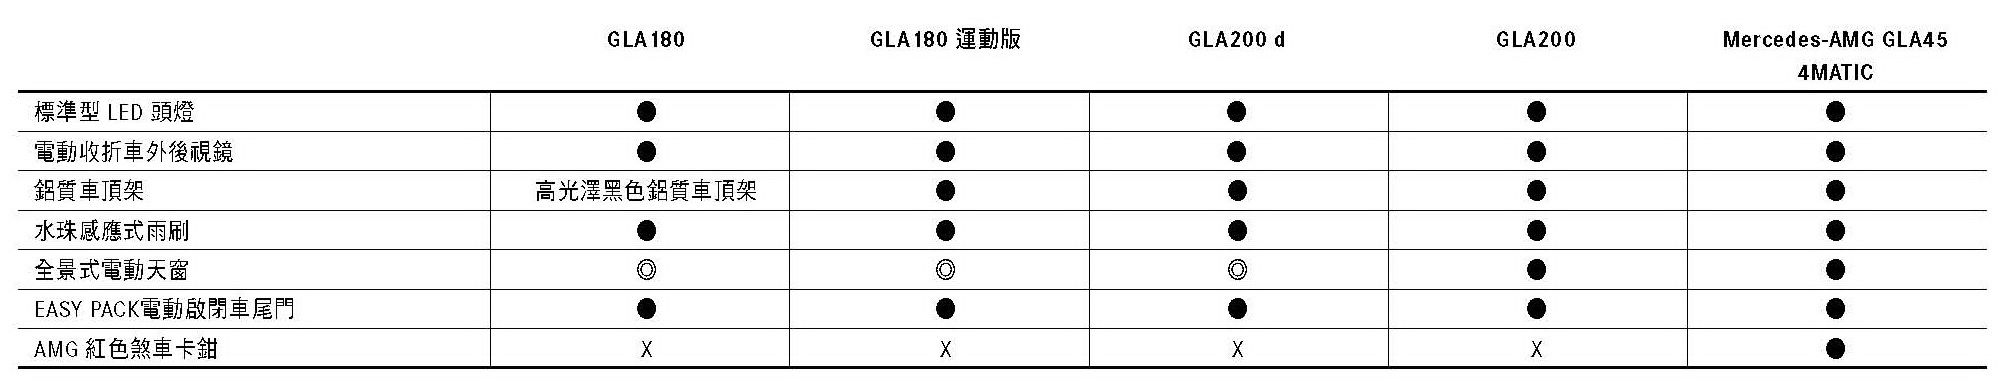 MY1718 GLA規格配備表20170510_final_頁面_07